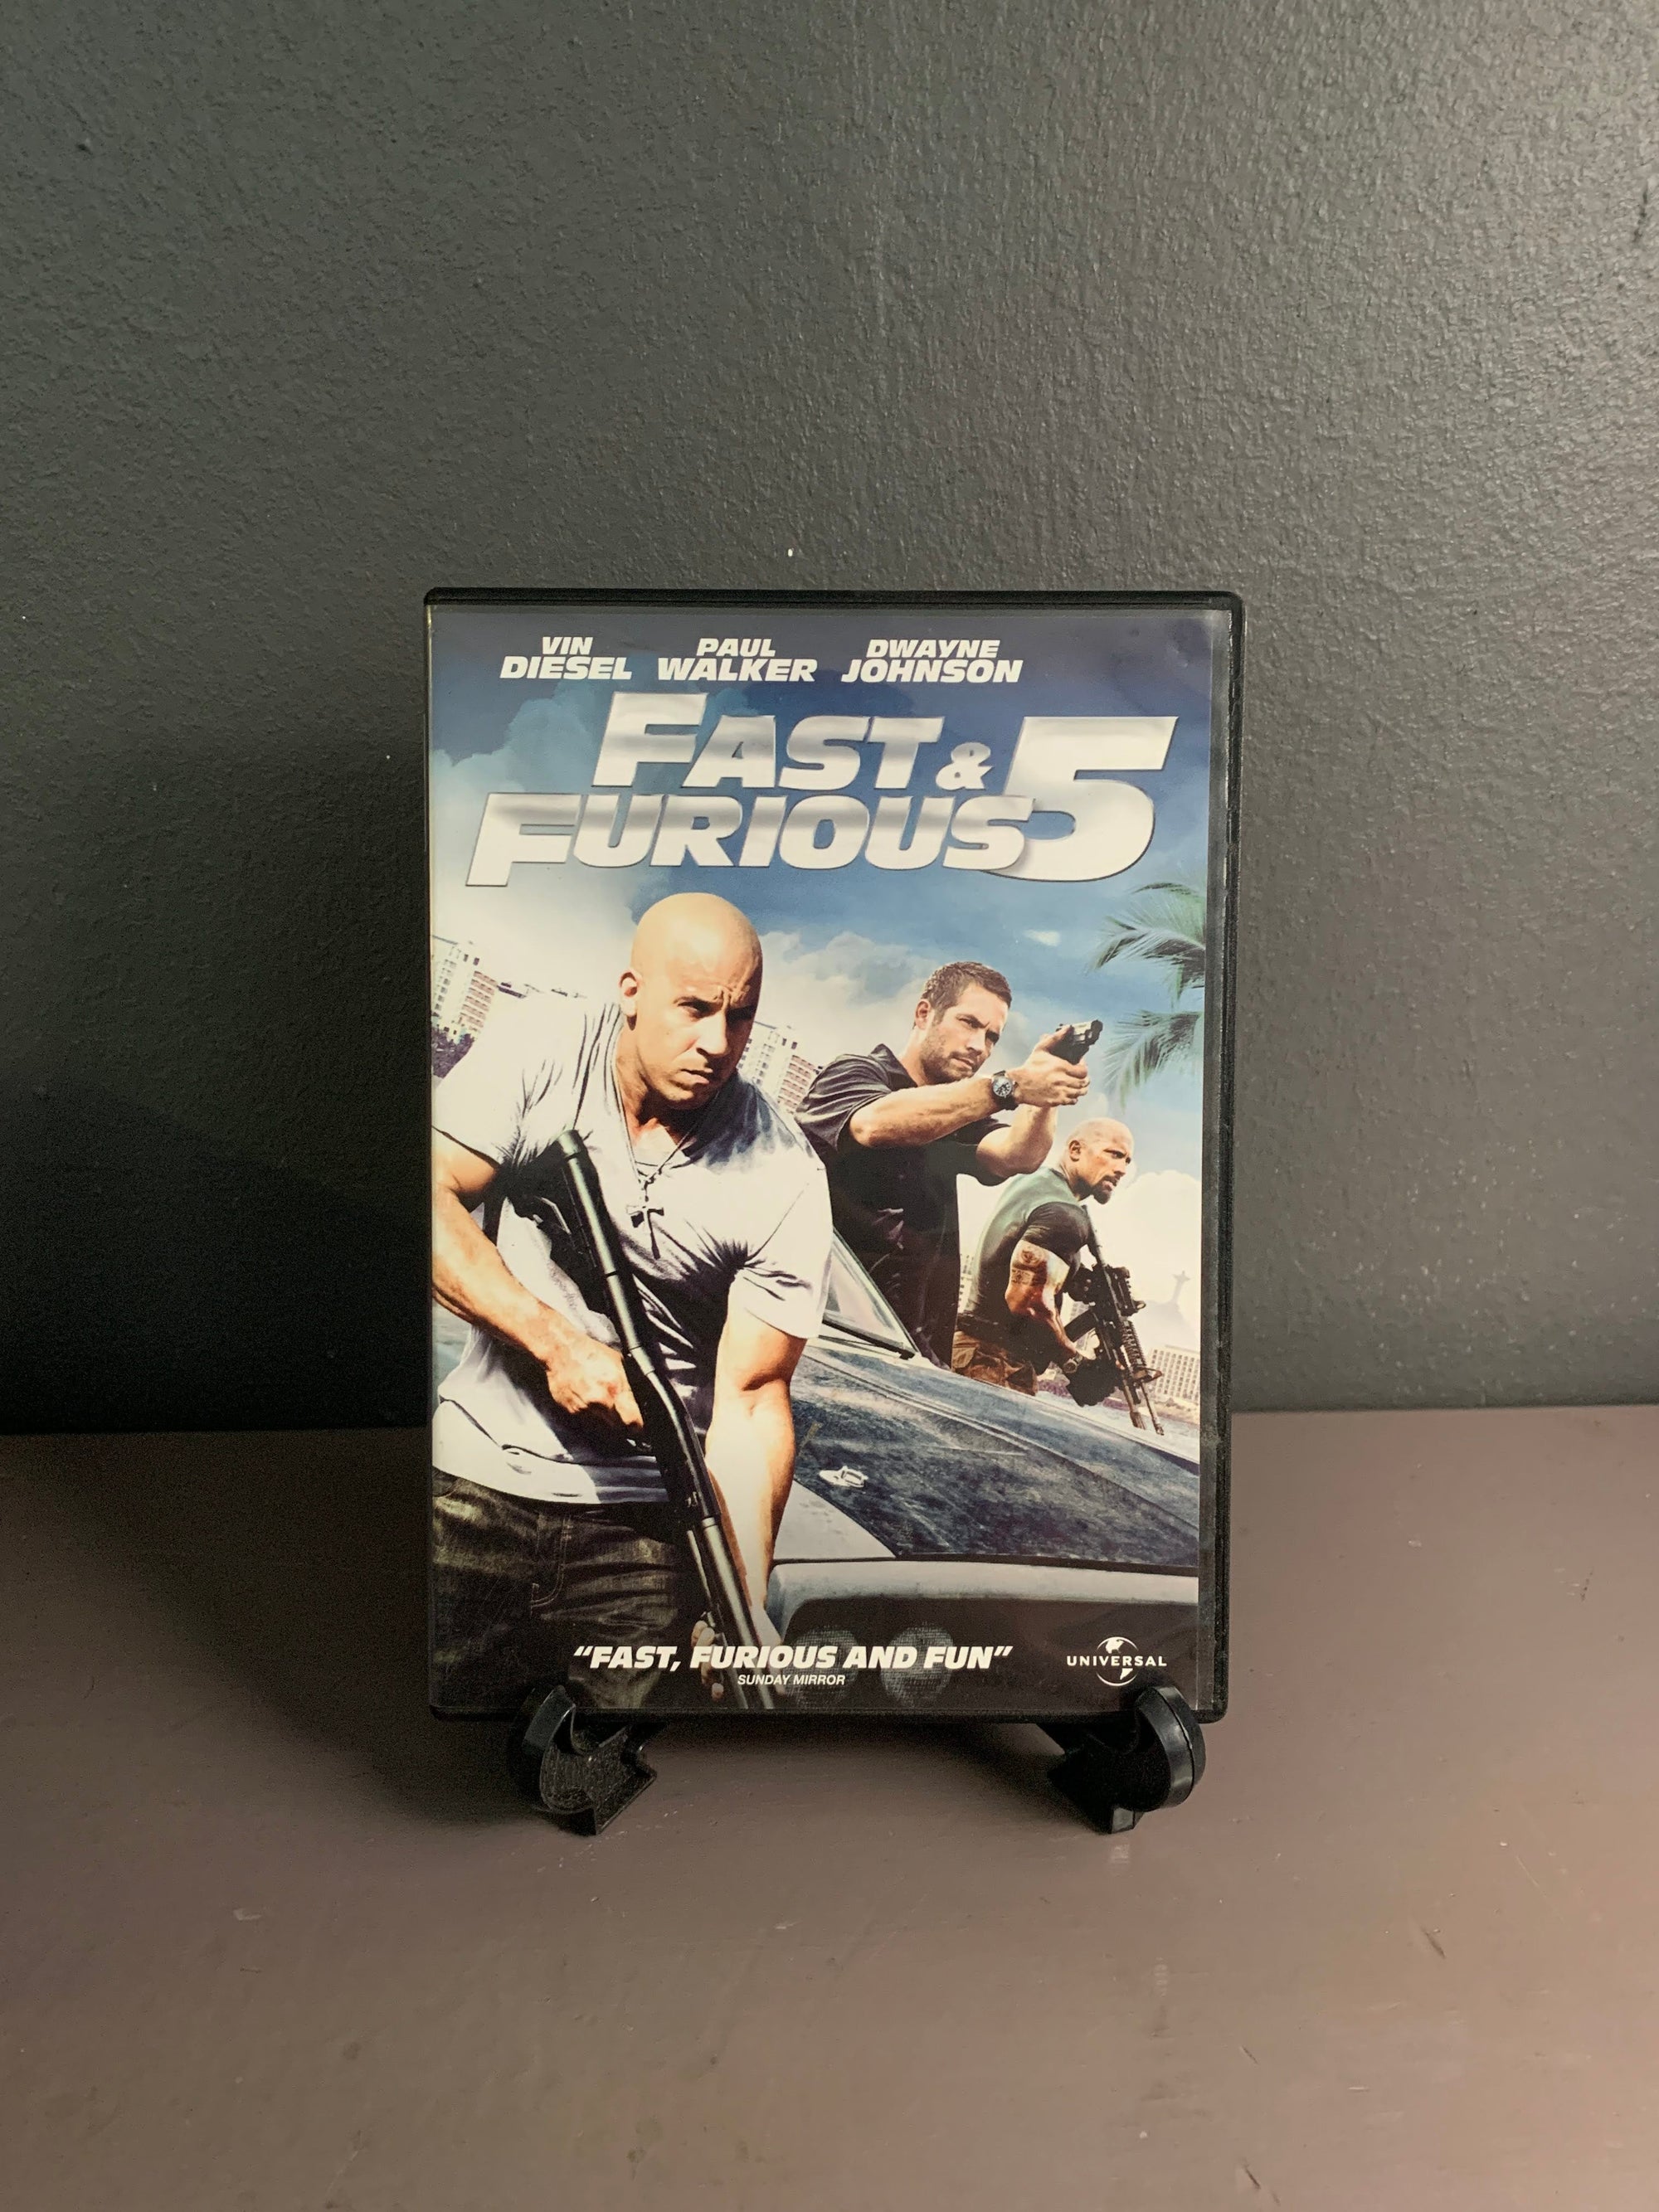 Fast & Furious 5 DVD - 2ndhandwarehouse.com